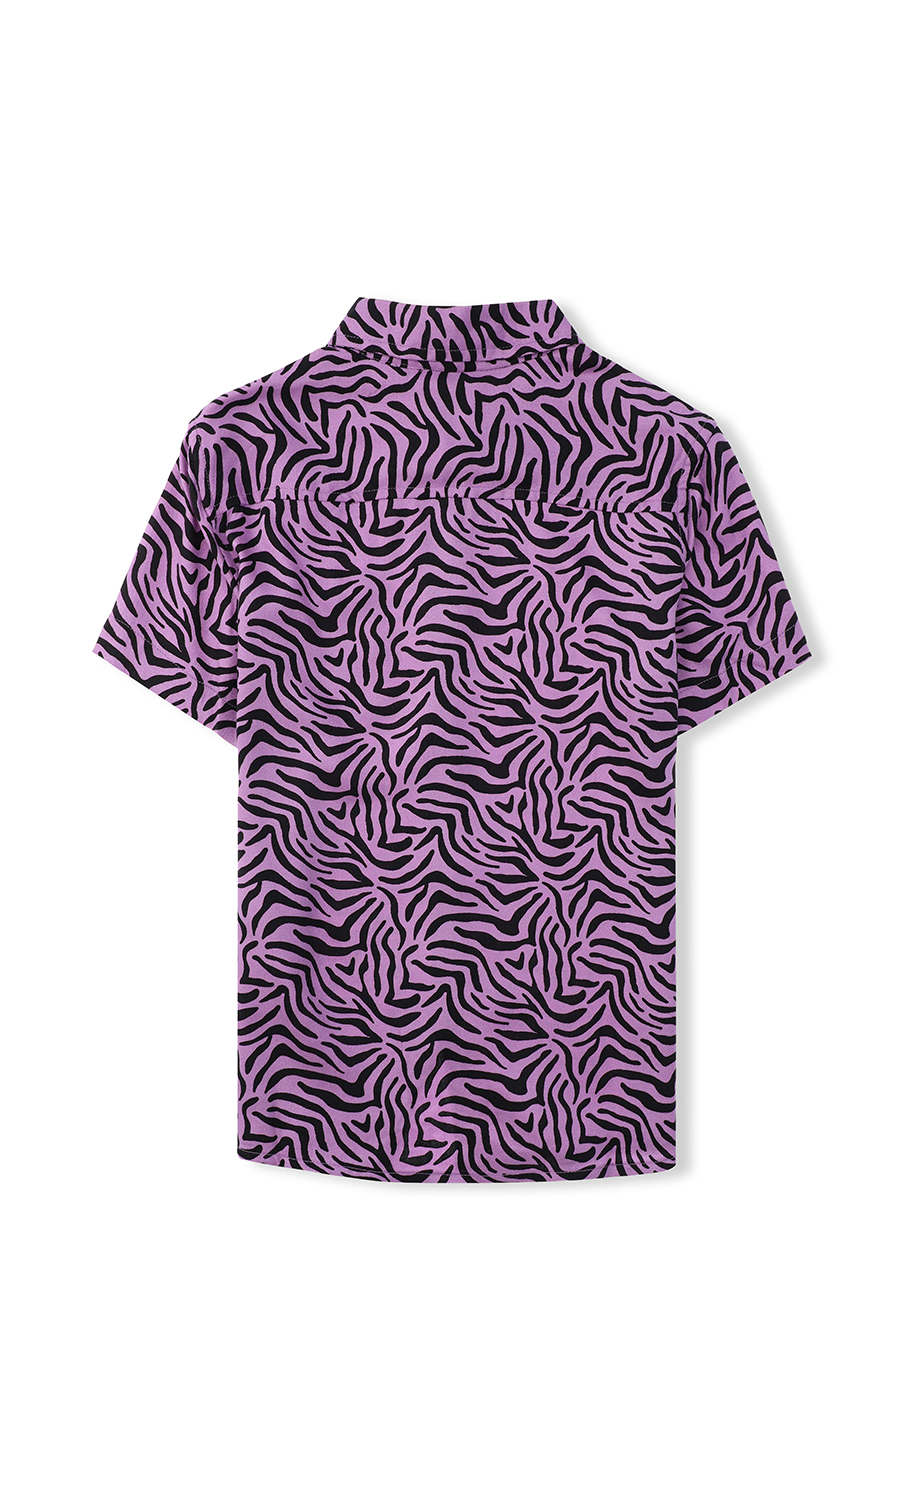 Camisa Animal Print